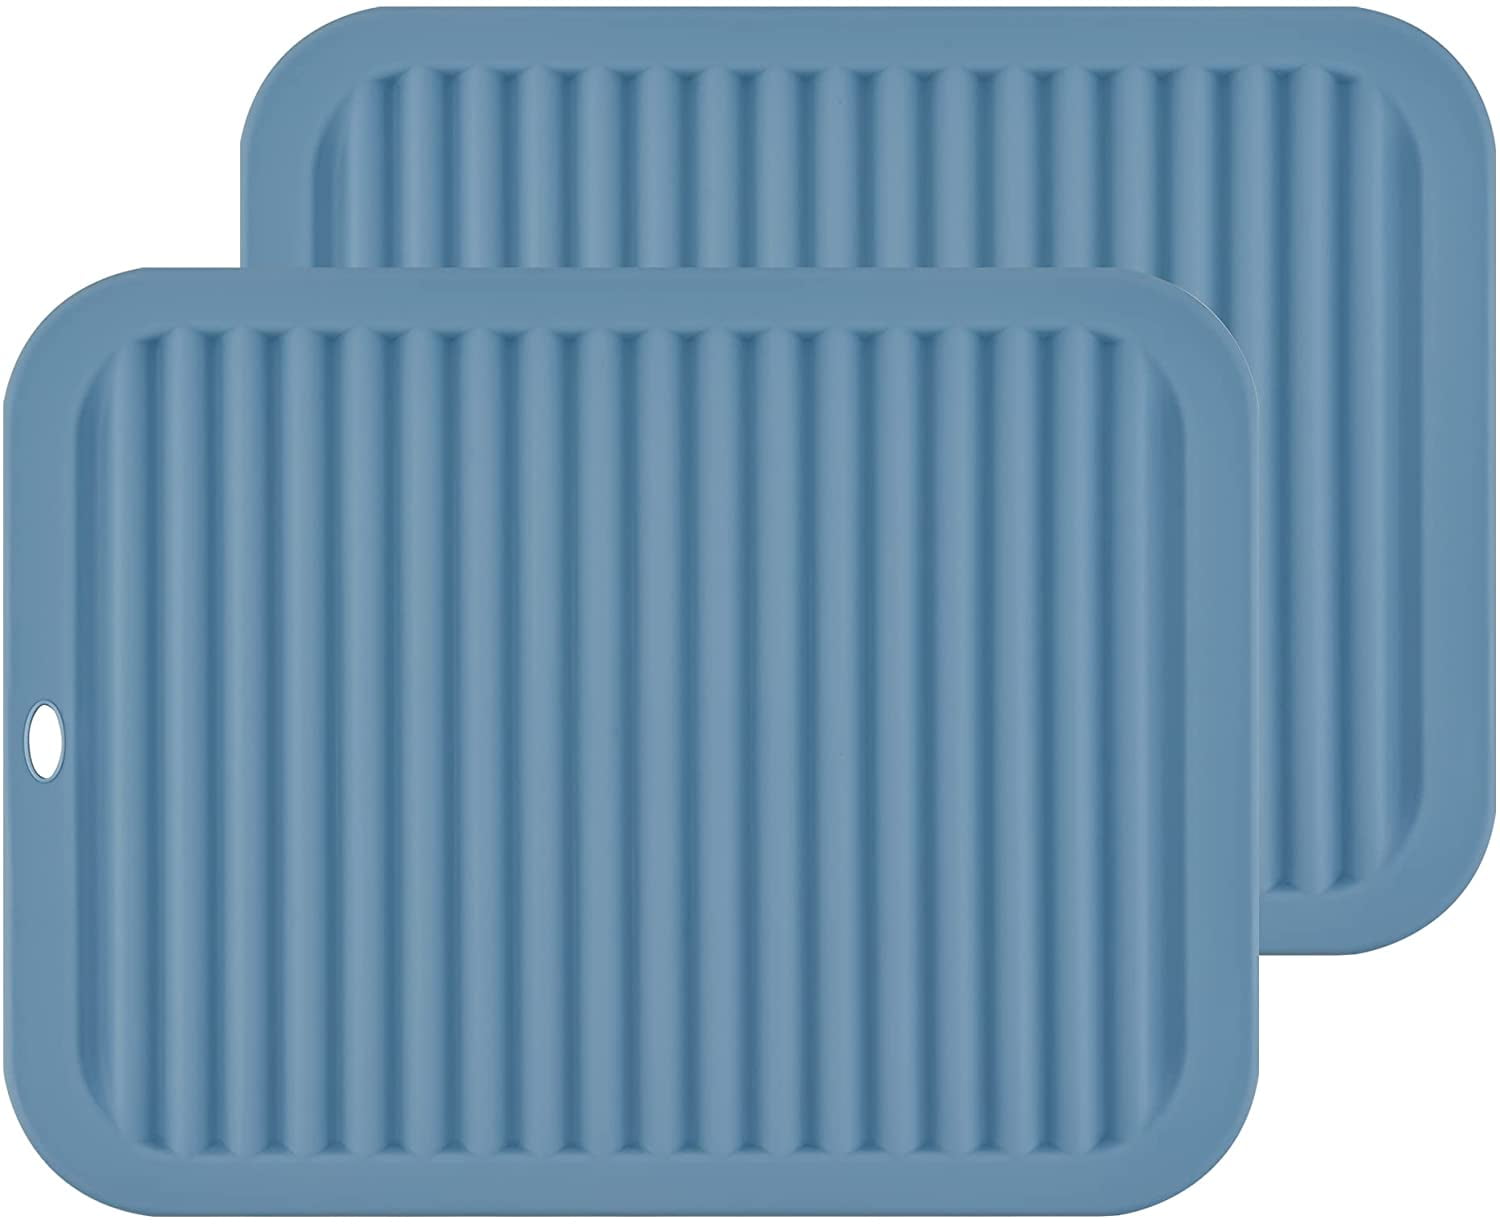 Rectangle Heat Resistant Mat Kitchen Silicone Non-slip Trivet Pot Pan Holder Pad 